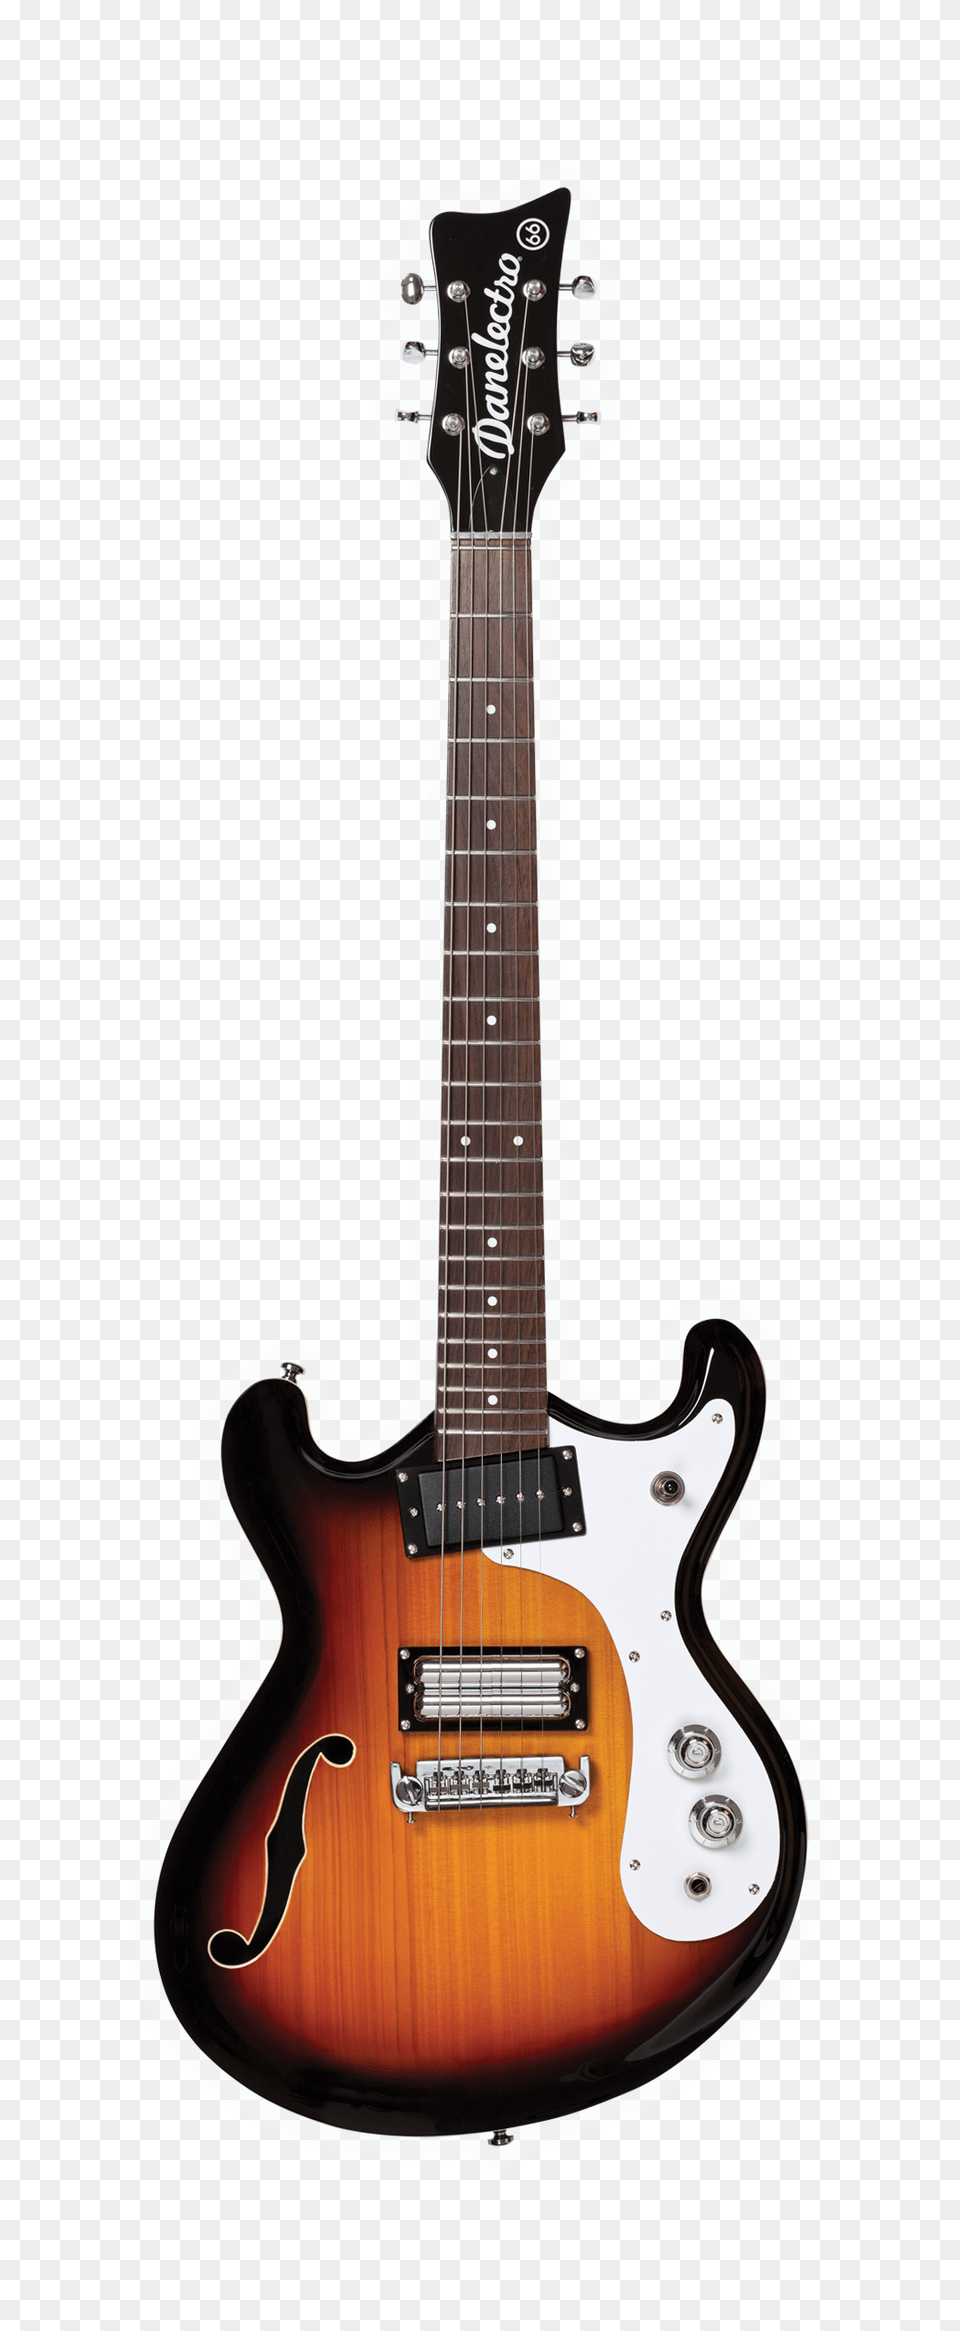 Guitar Danelectro Guitars Projekty Do, Electric Guitar, Musical Instrument Png